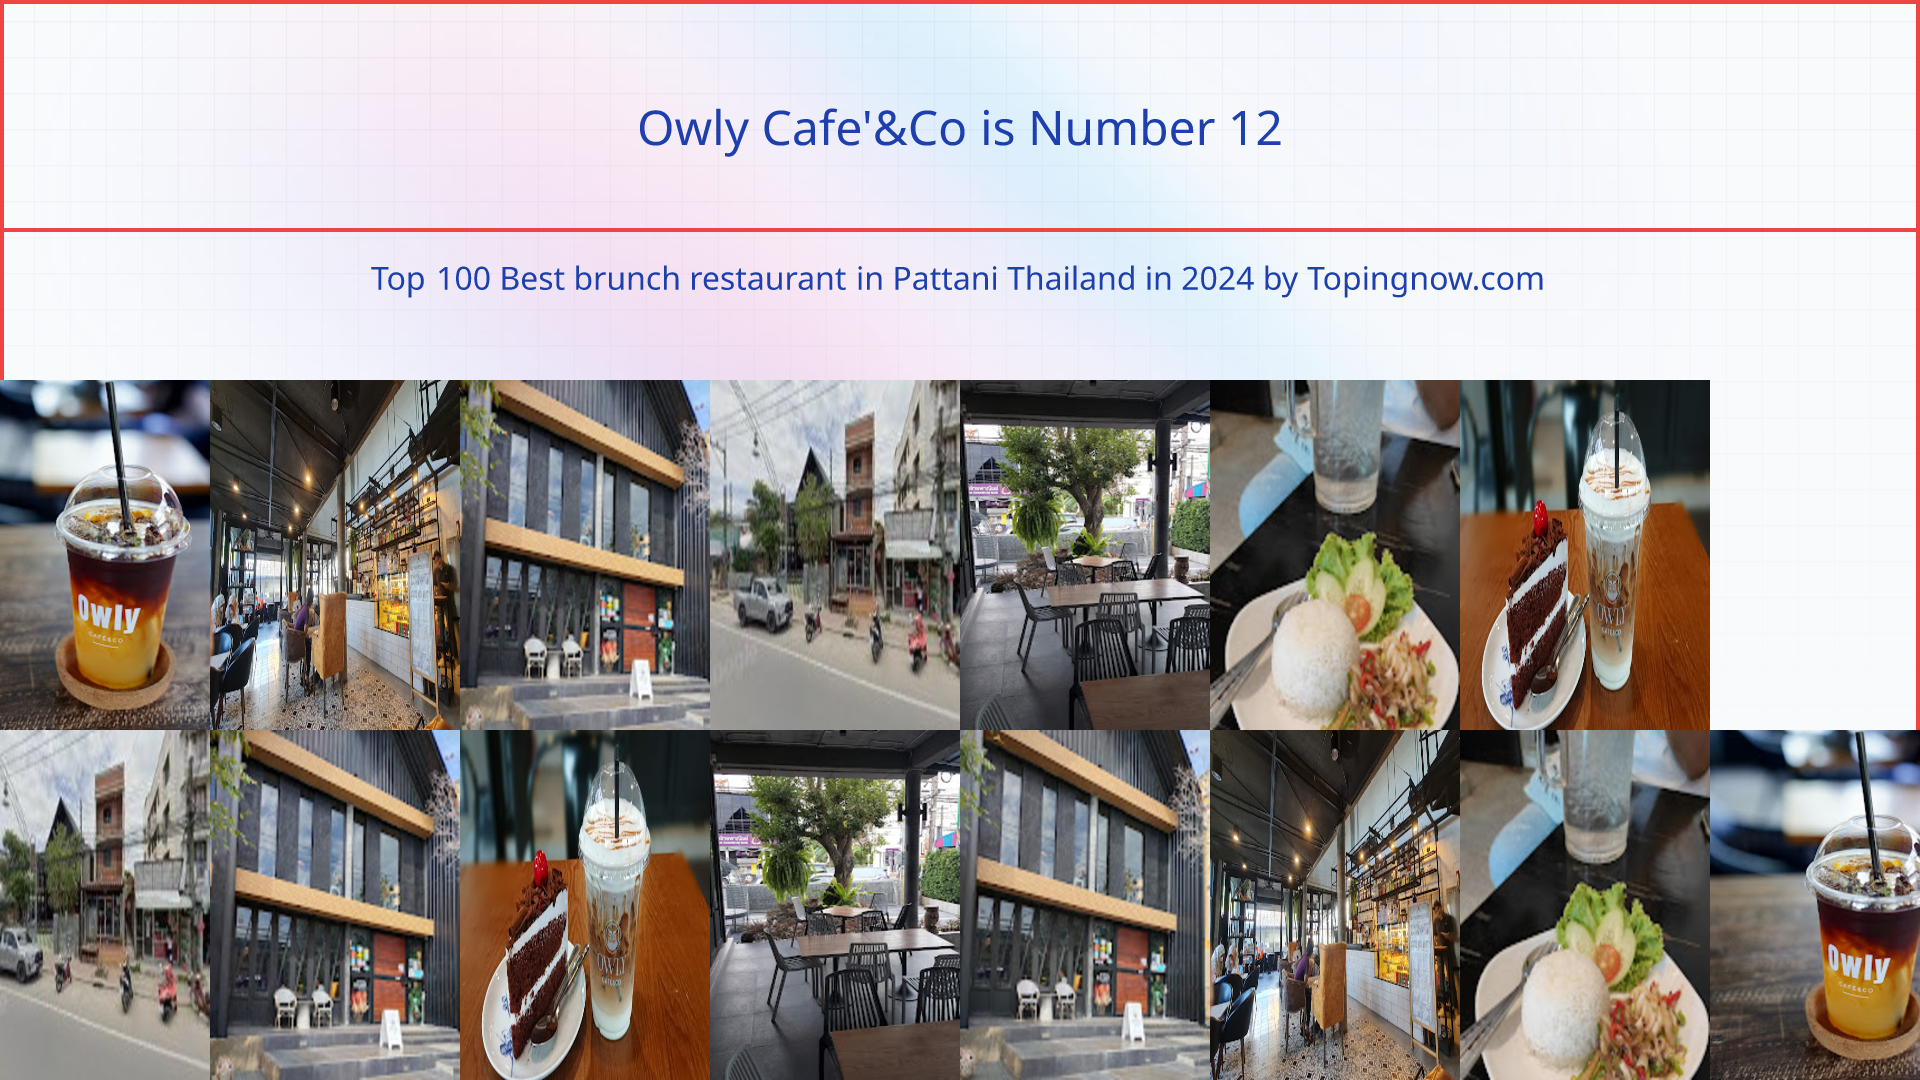 Owly Cafe'&Co: Top 100 Best brunch restaurant in Pattani Thailand in 2024